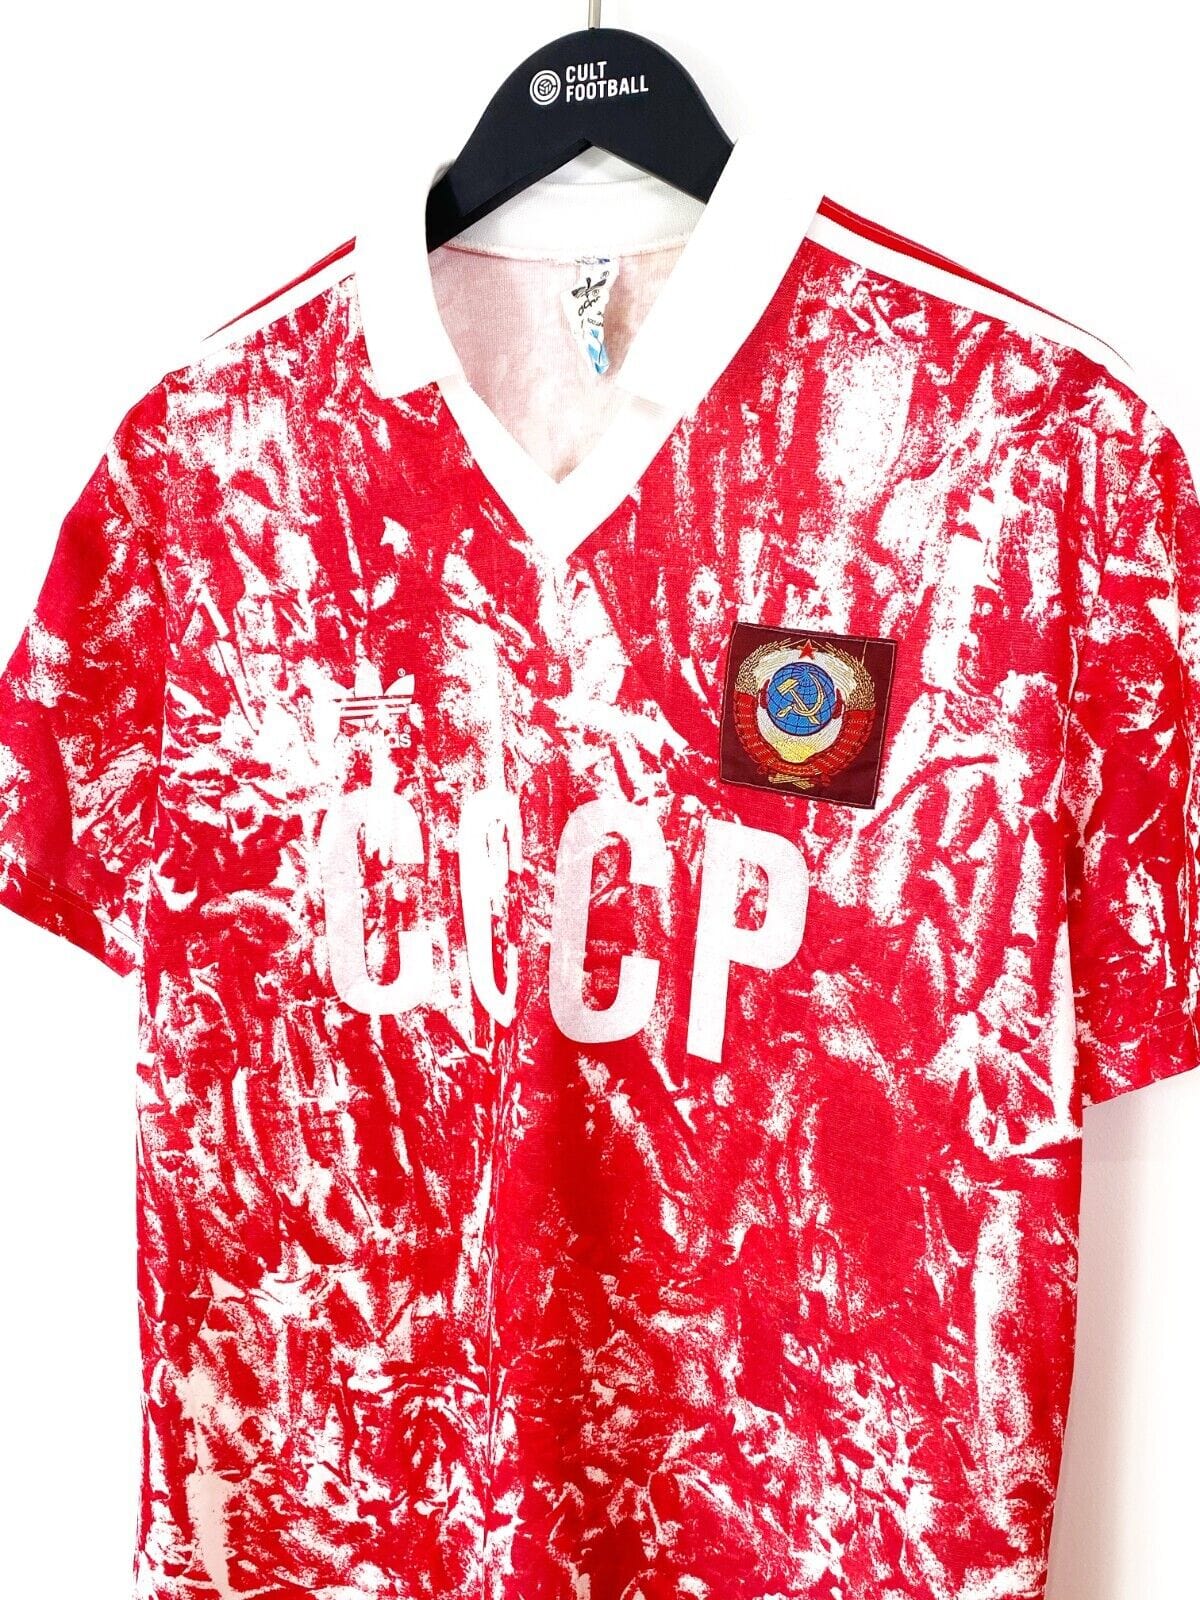 Russia Soviet Union CCCP Adidas original shirt 1989 1990 1991 - Medium